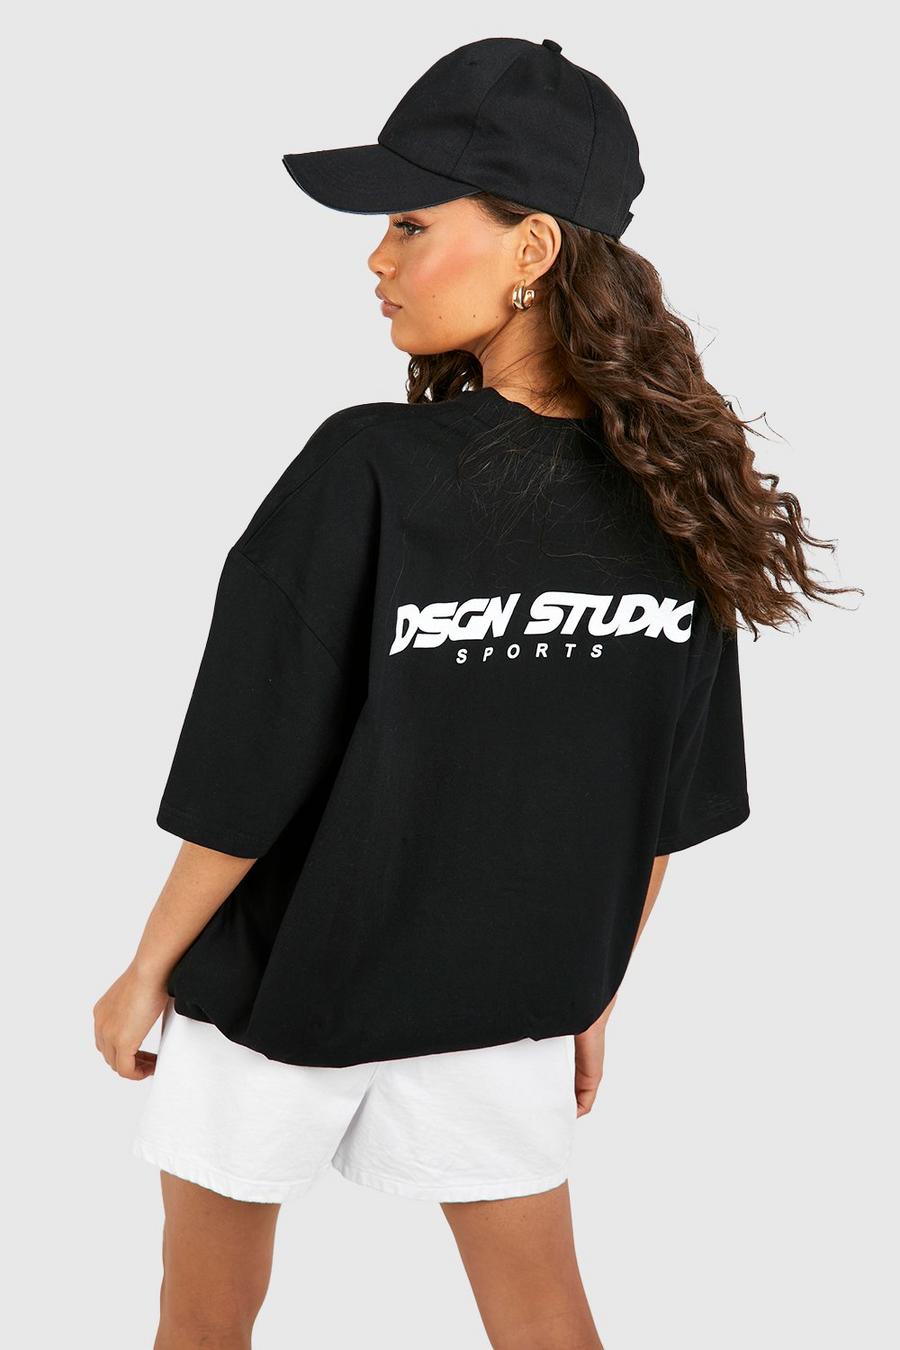 Oversize T-Shirt mit Dsgn Studio Sports Slogan, Black